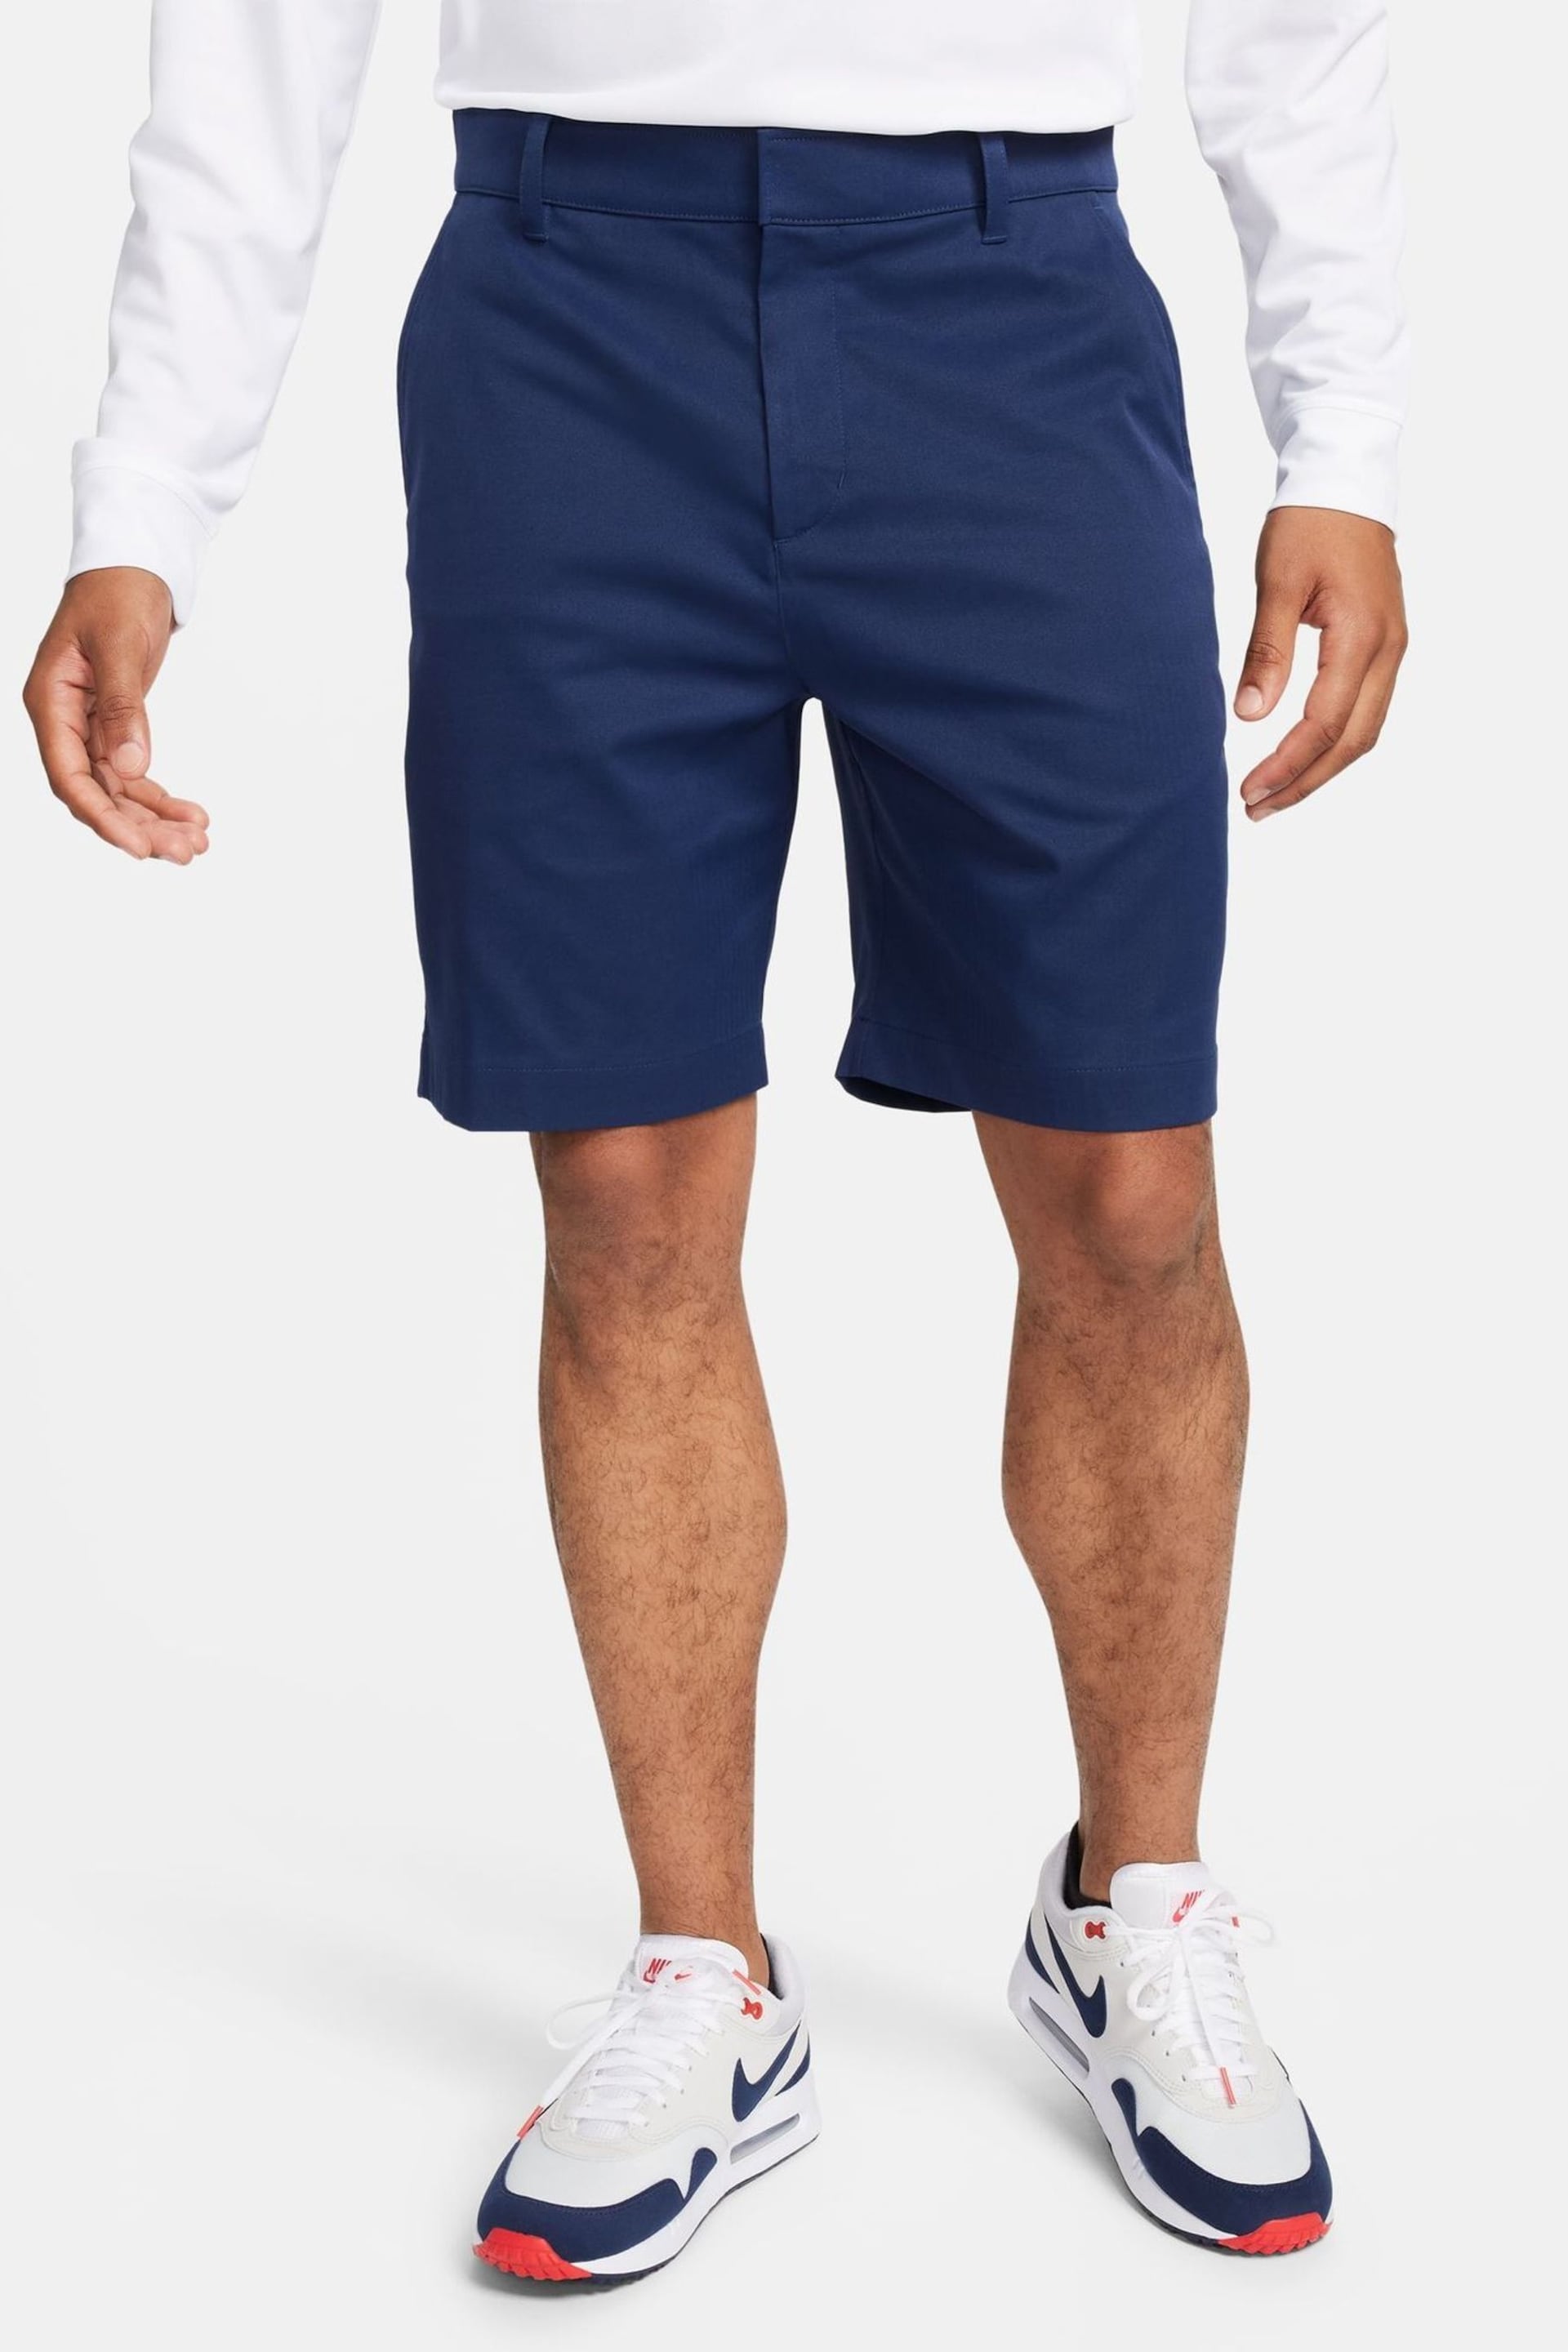 Nike Blue Tour 8 inch Chino Golf Shorts - Image 1 of 9